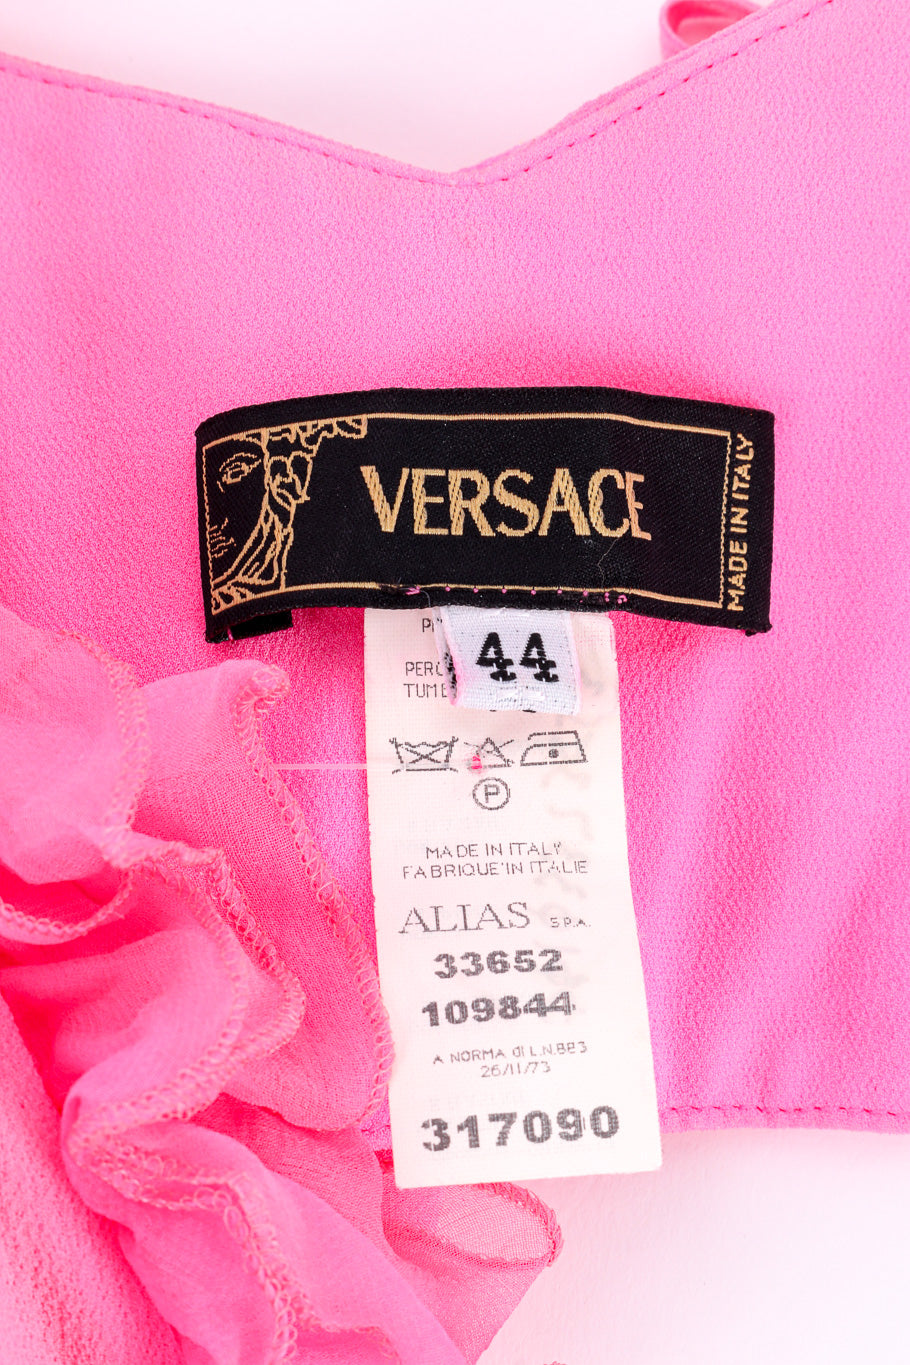 Halter dress by Versace label @recessla